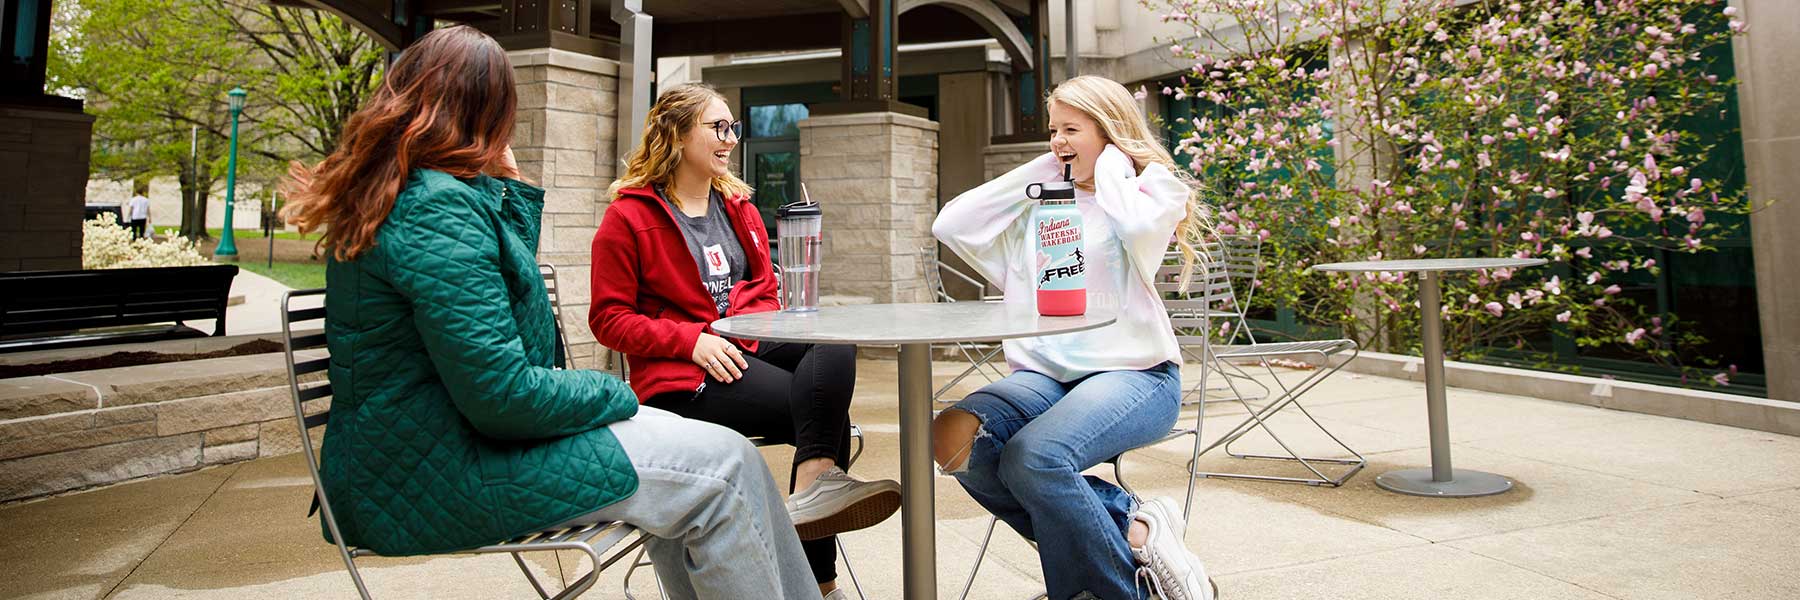 Three students sit at outdoor table conversing